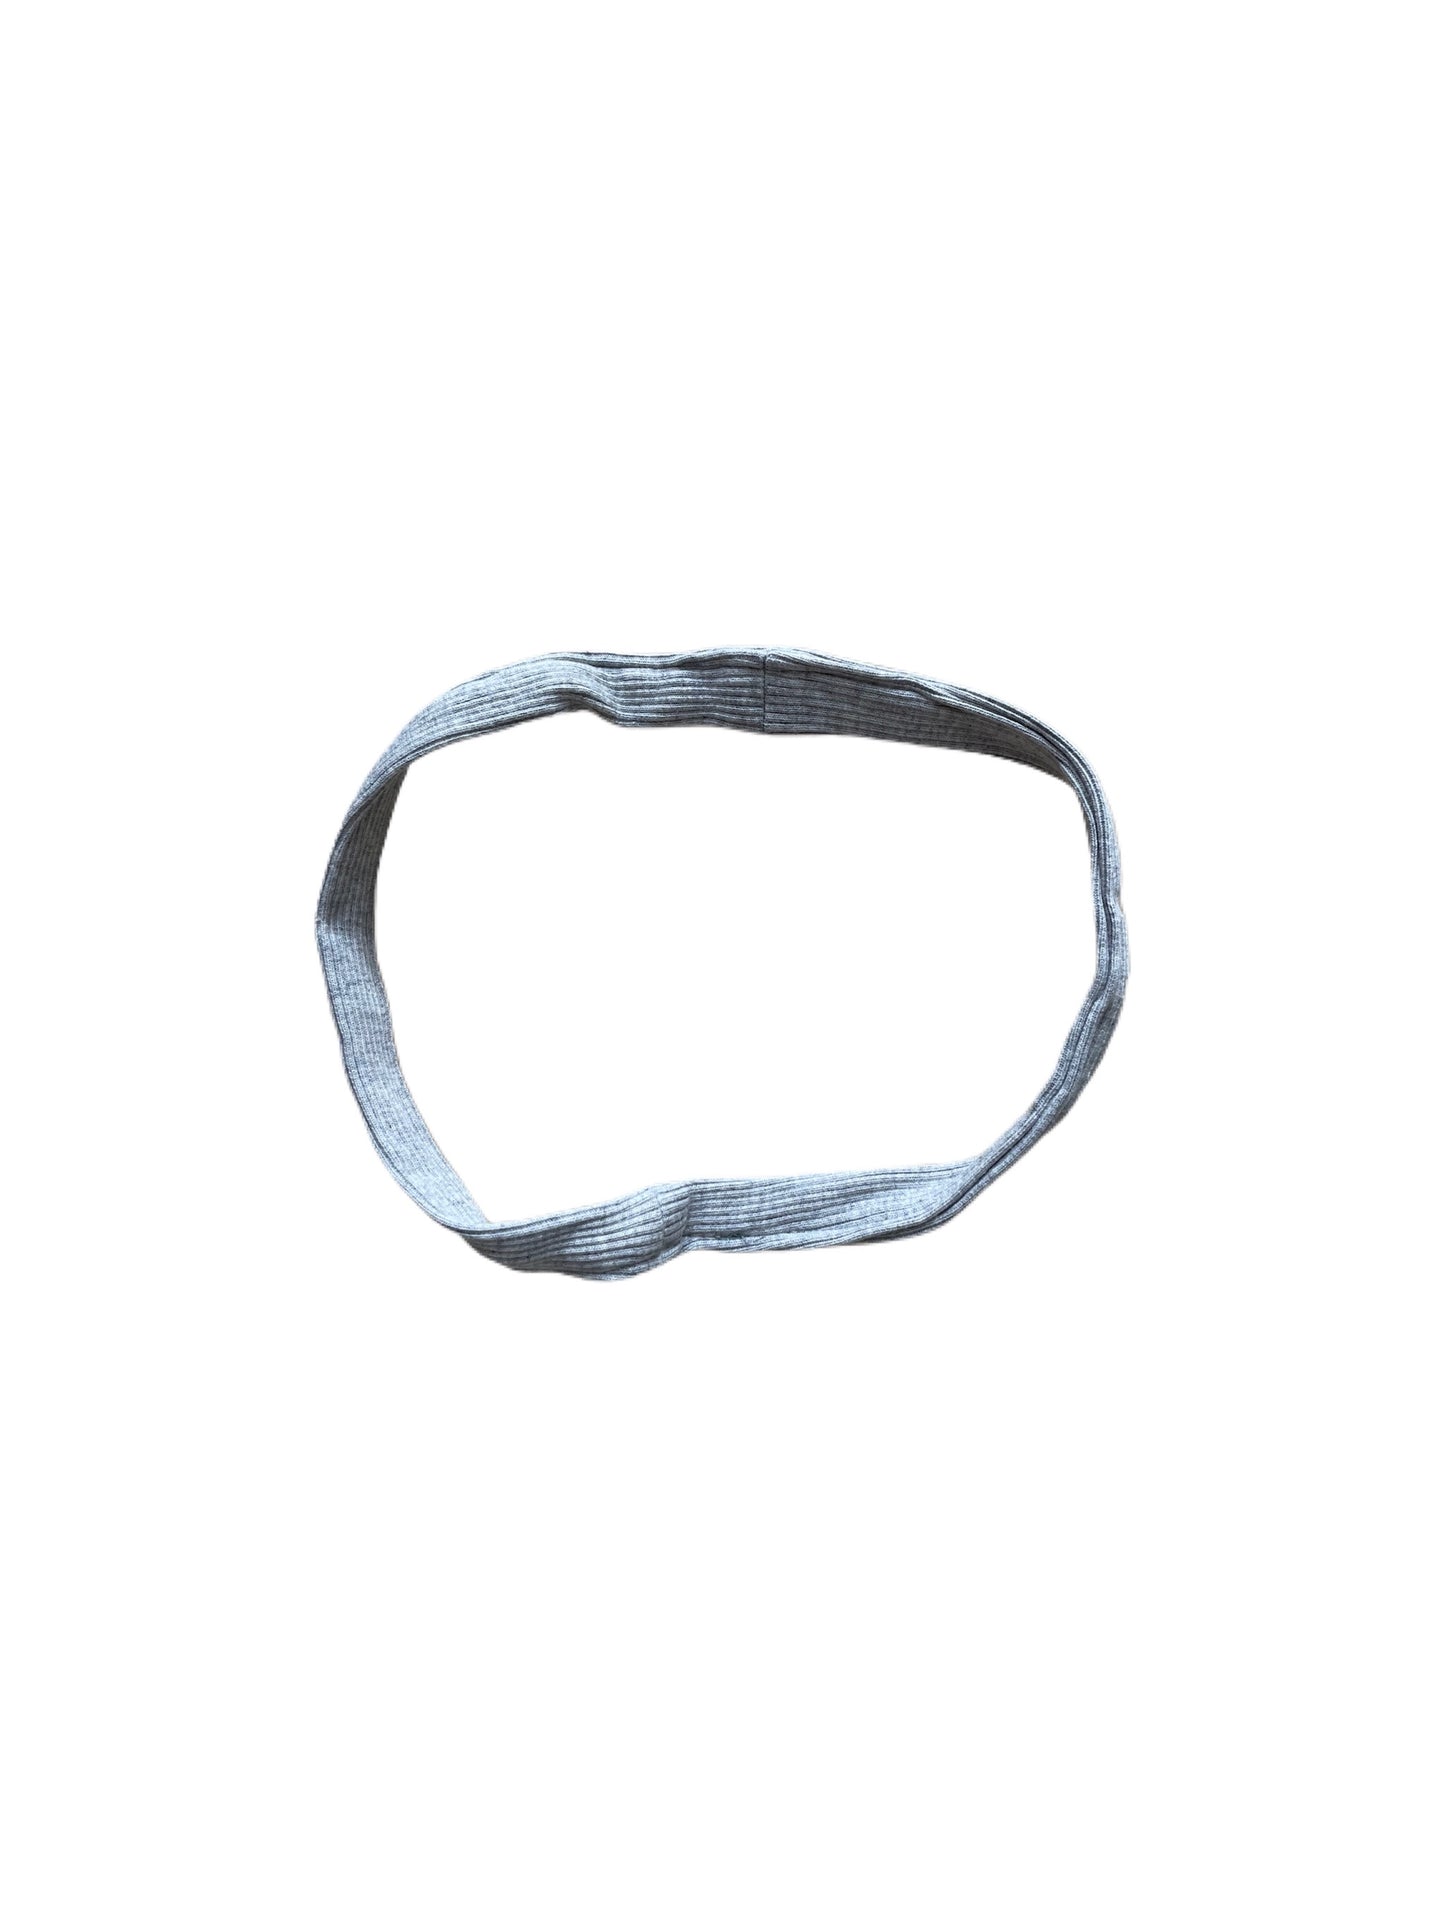 Ribbed Grey Headband Product Front | Beatrice Bayliss